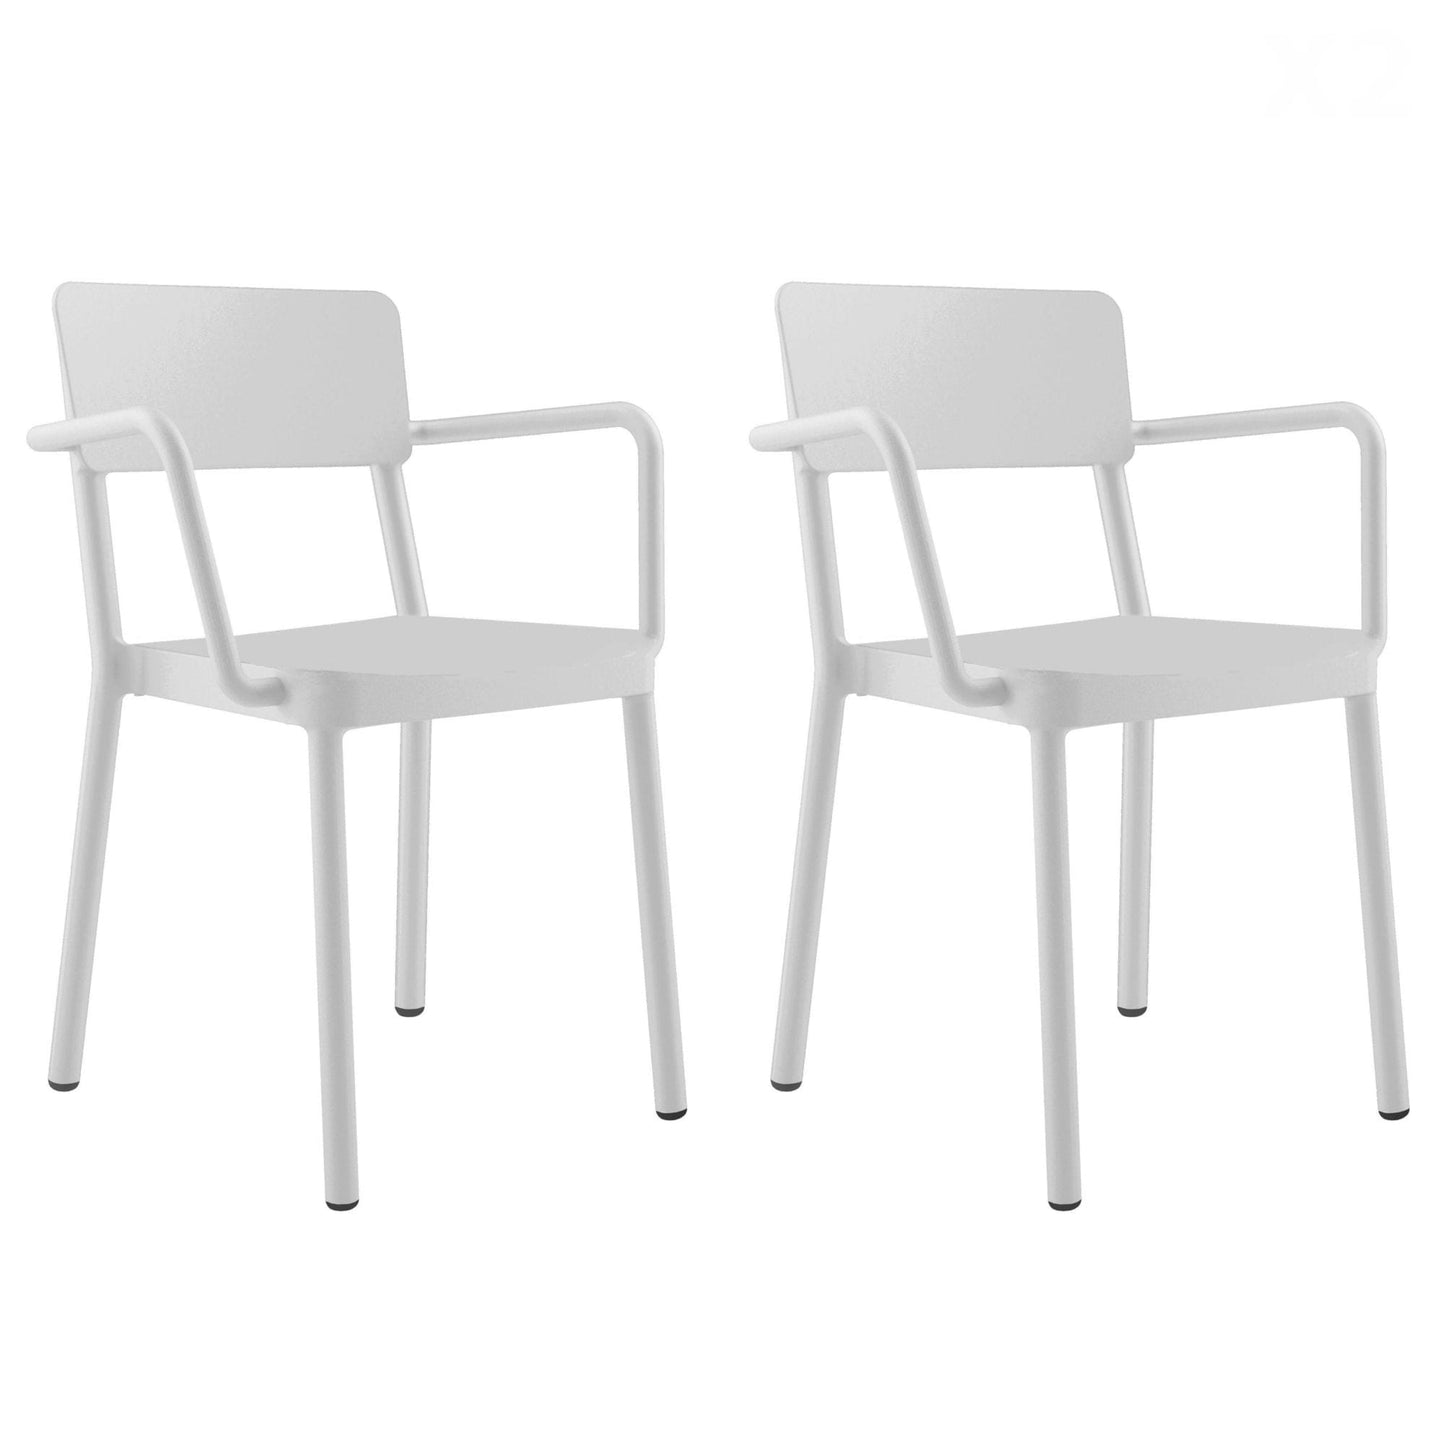 Resol lisboa set 2 silla con brazos interior, exterior blanco